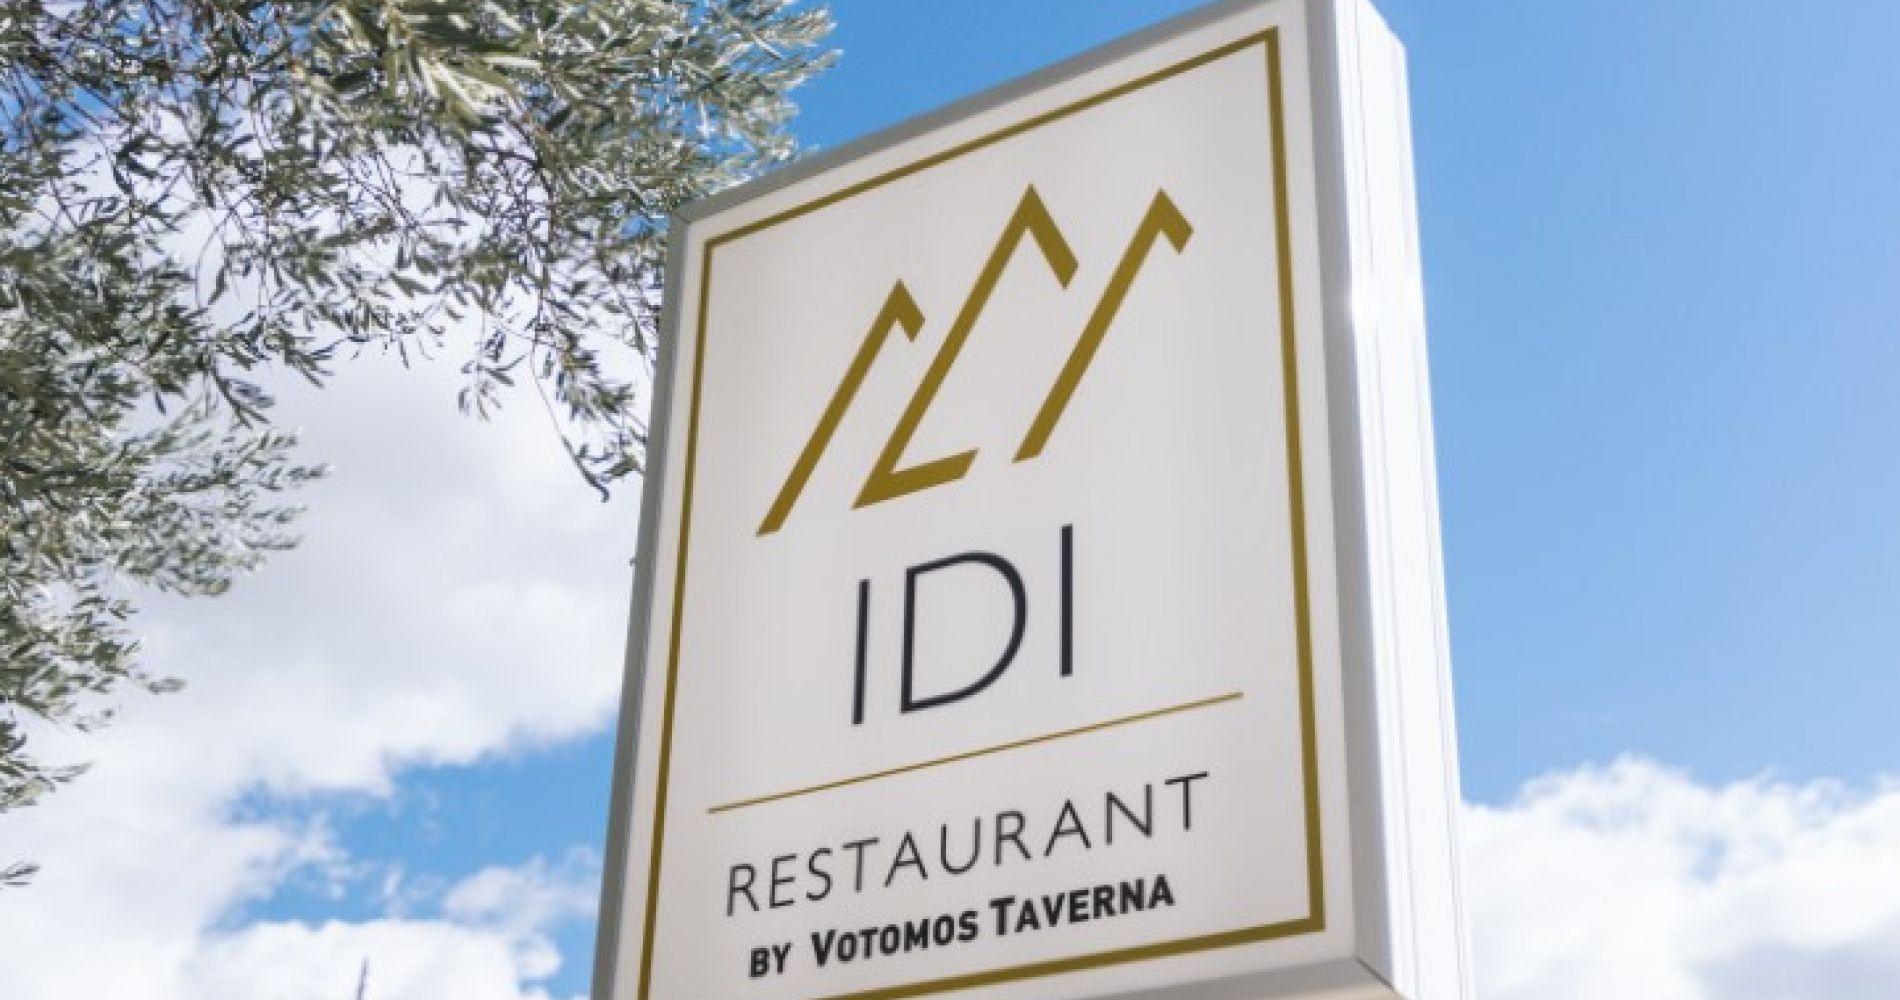 Restaurant Idi - Traditional dishes and fresh fish farm 